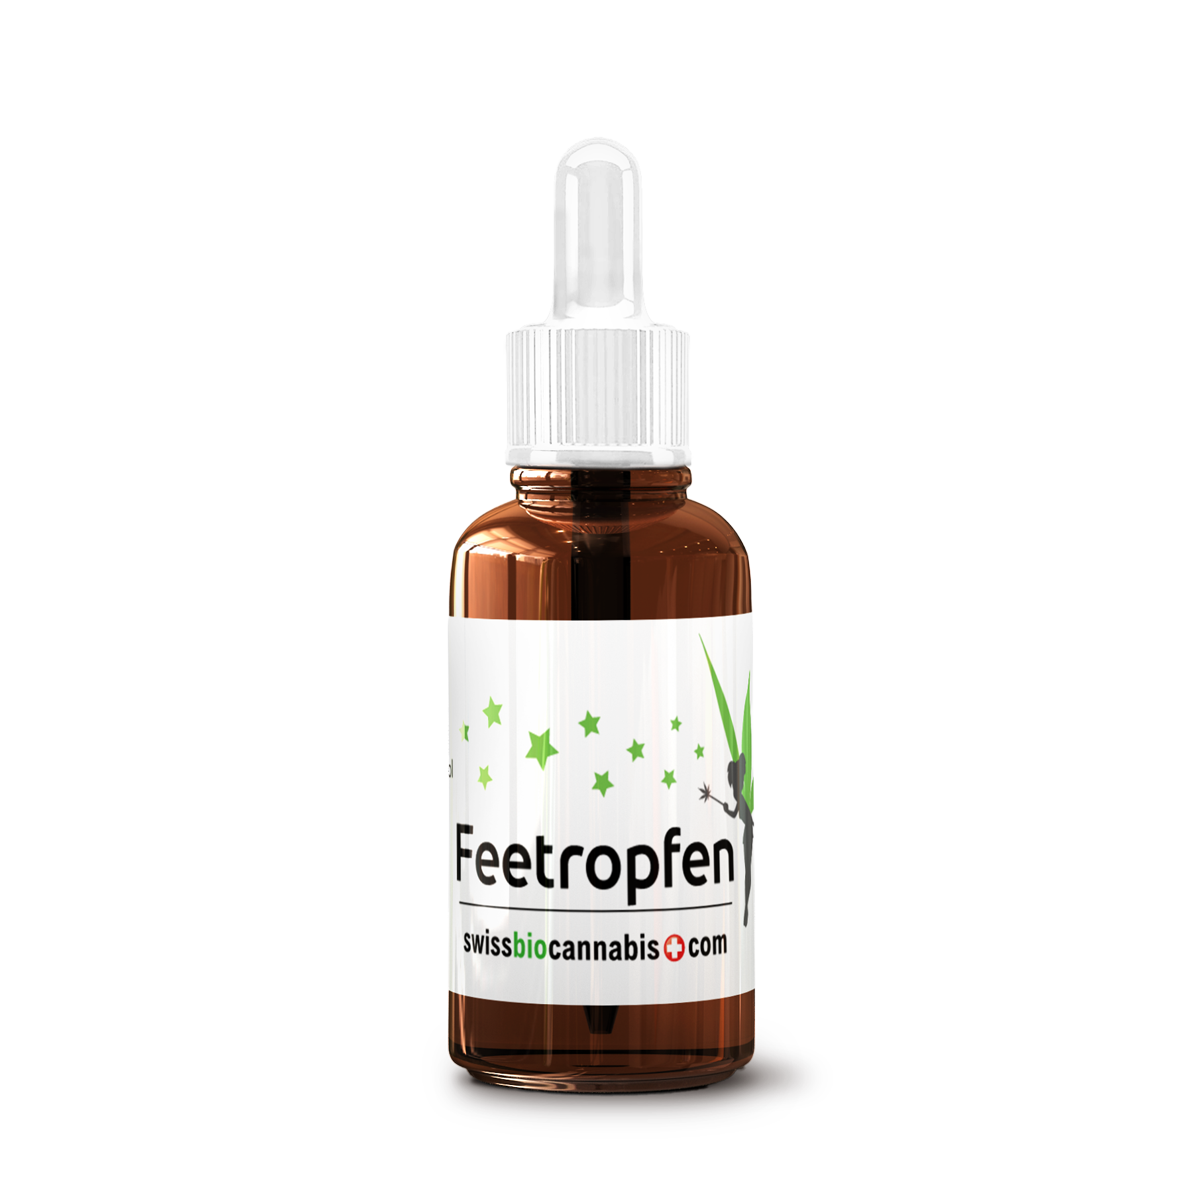 «Feetropfen» | CBD oil with 100% Swiss organic hemp